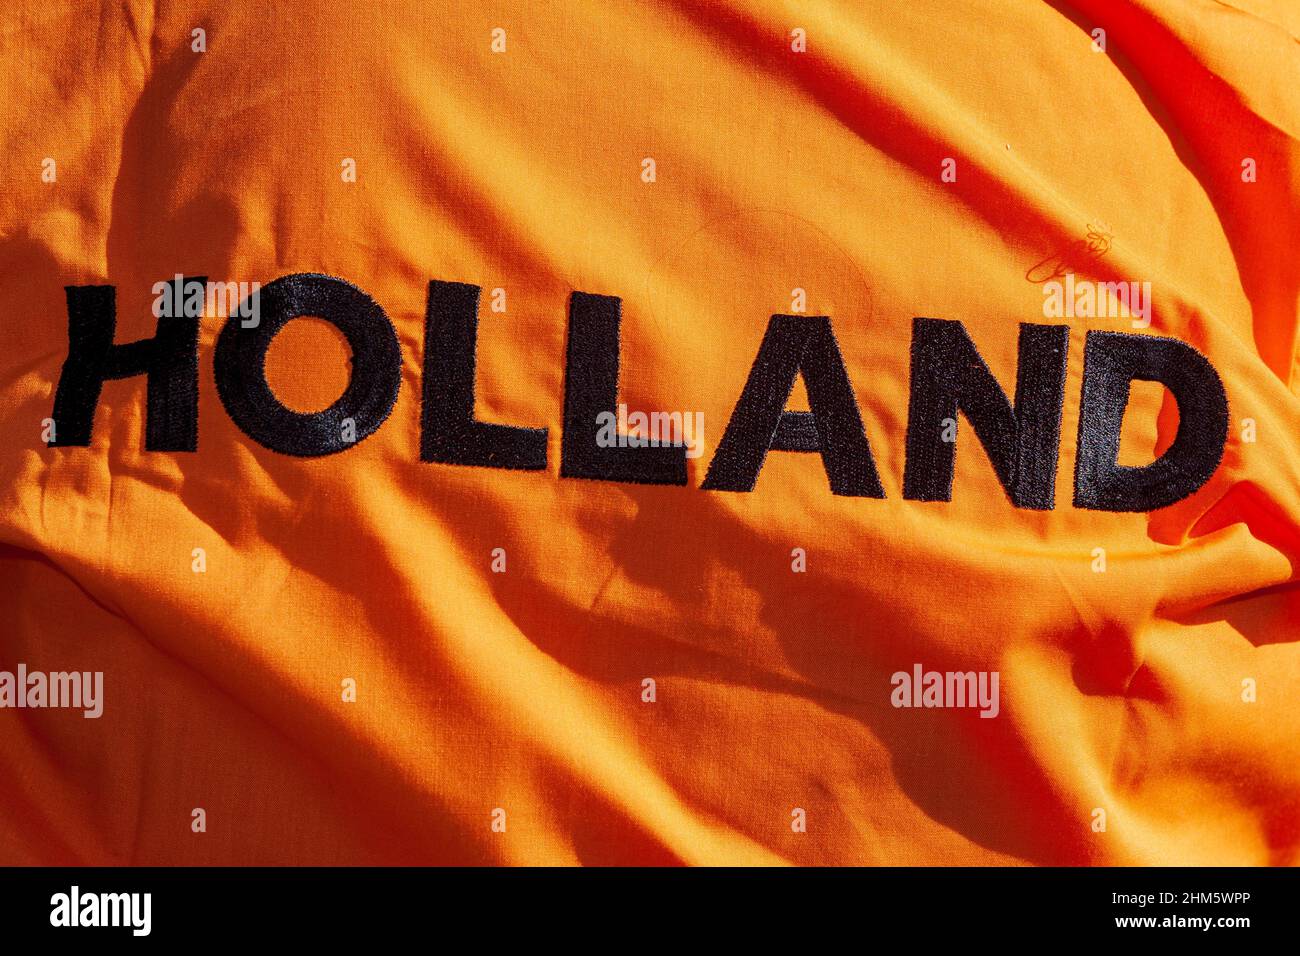 Word Holland in black on orange background Stock Photo